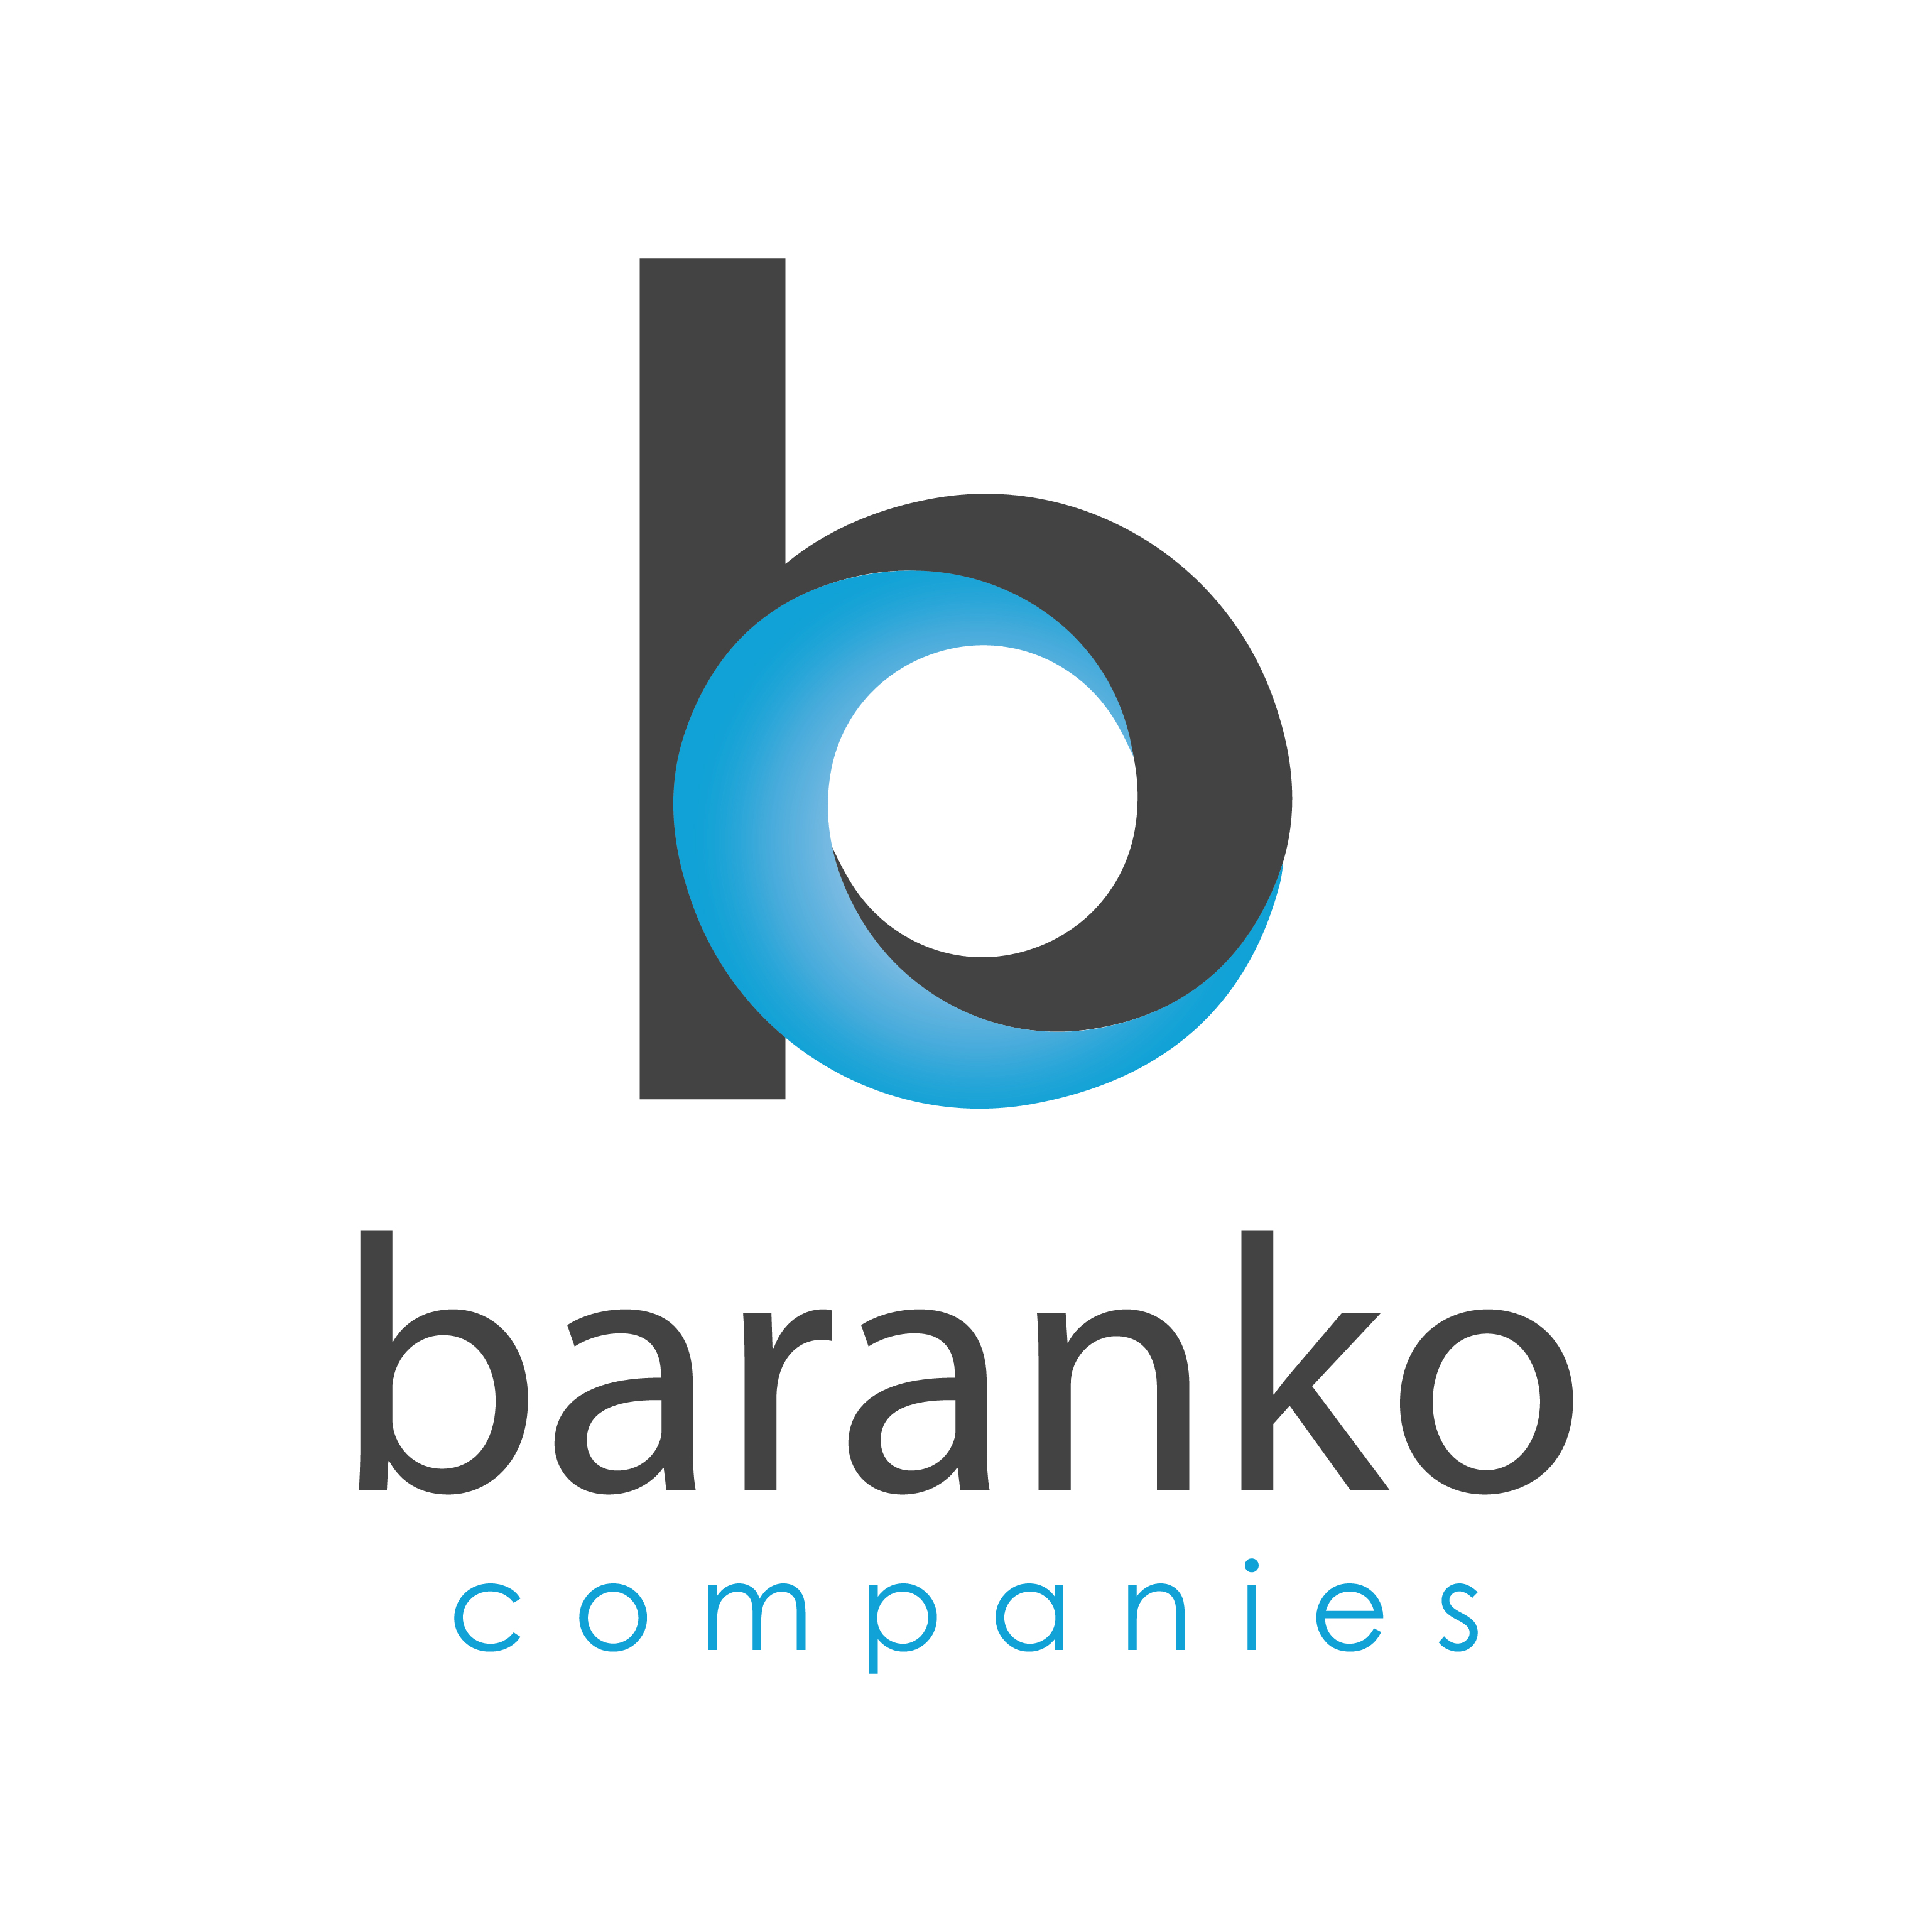 Baranko Companies